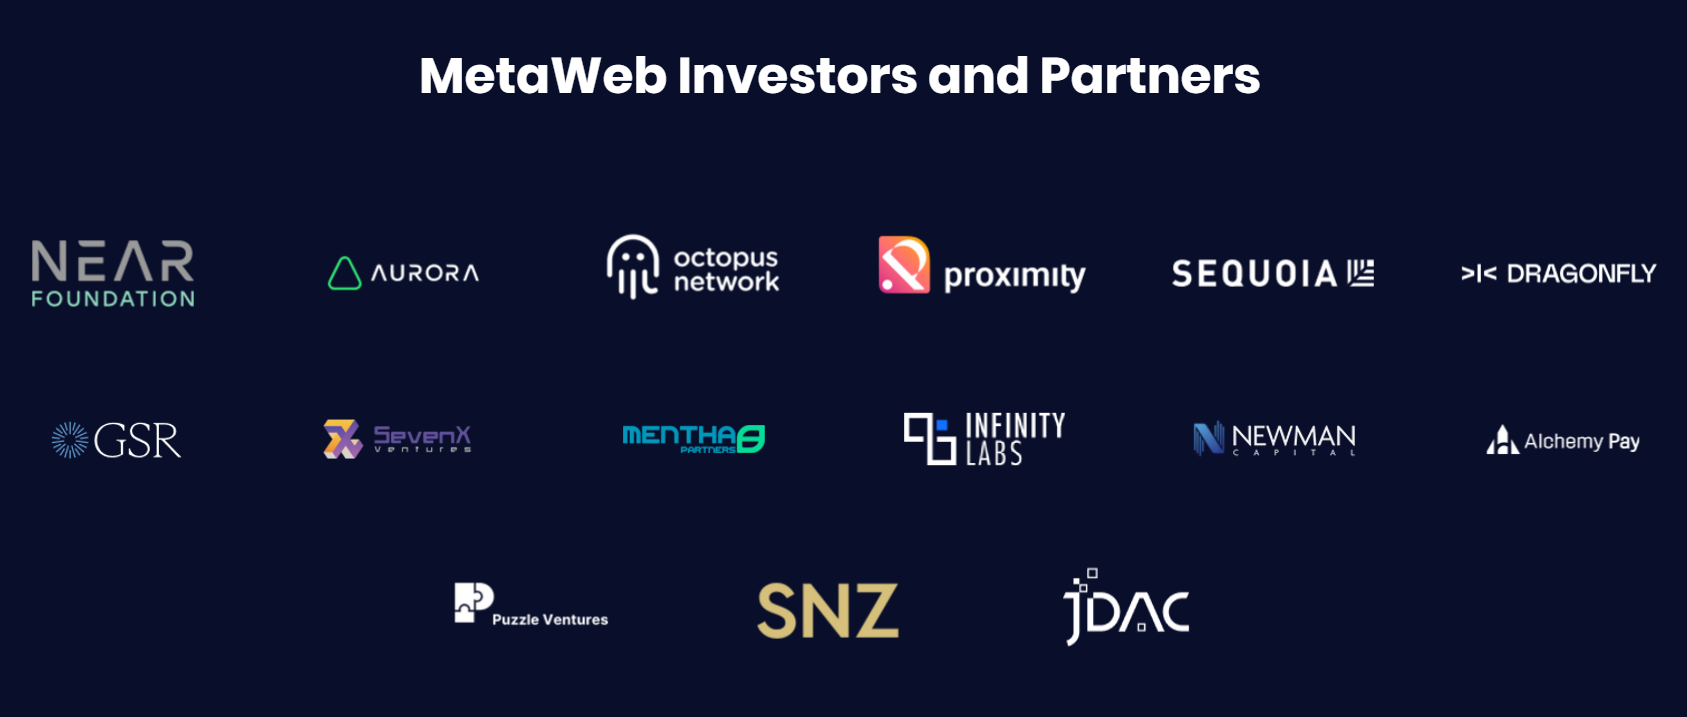 MetaWeb Ventures Investors and Partners